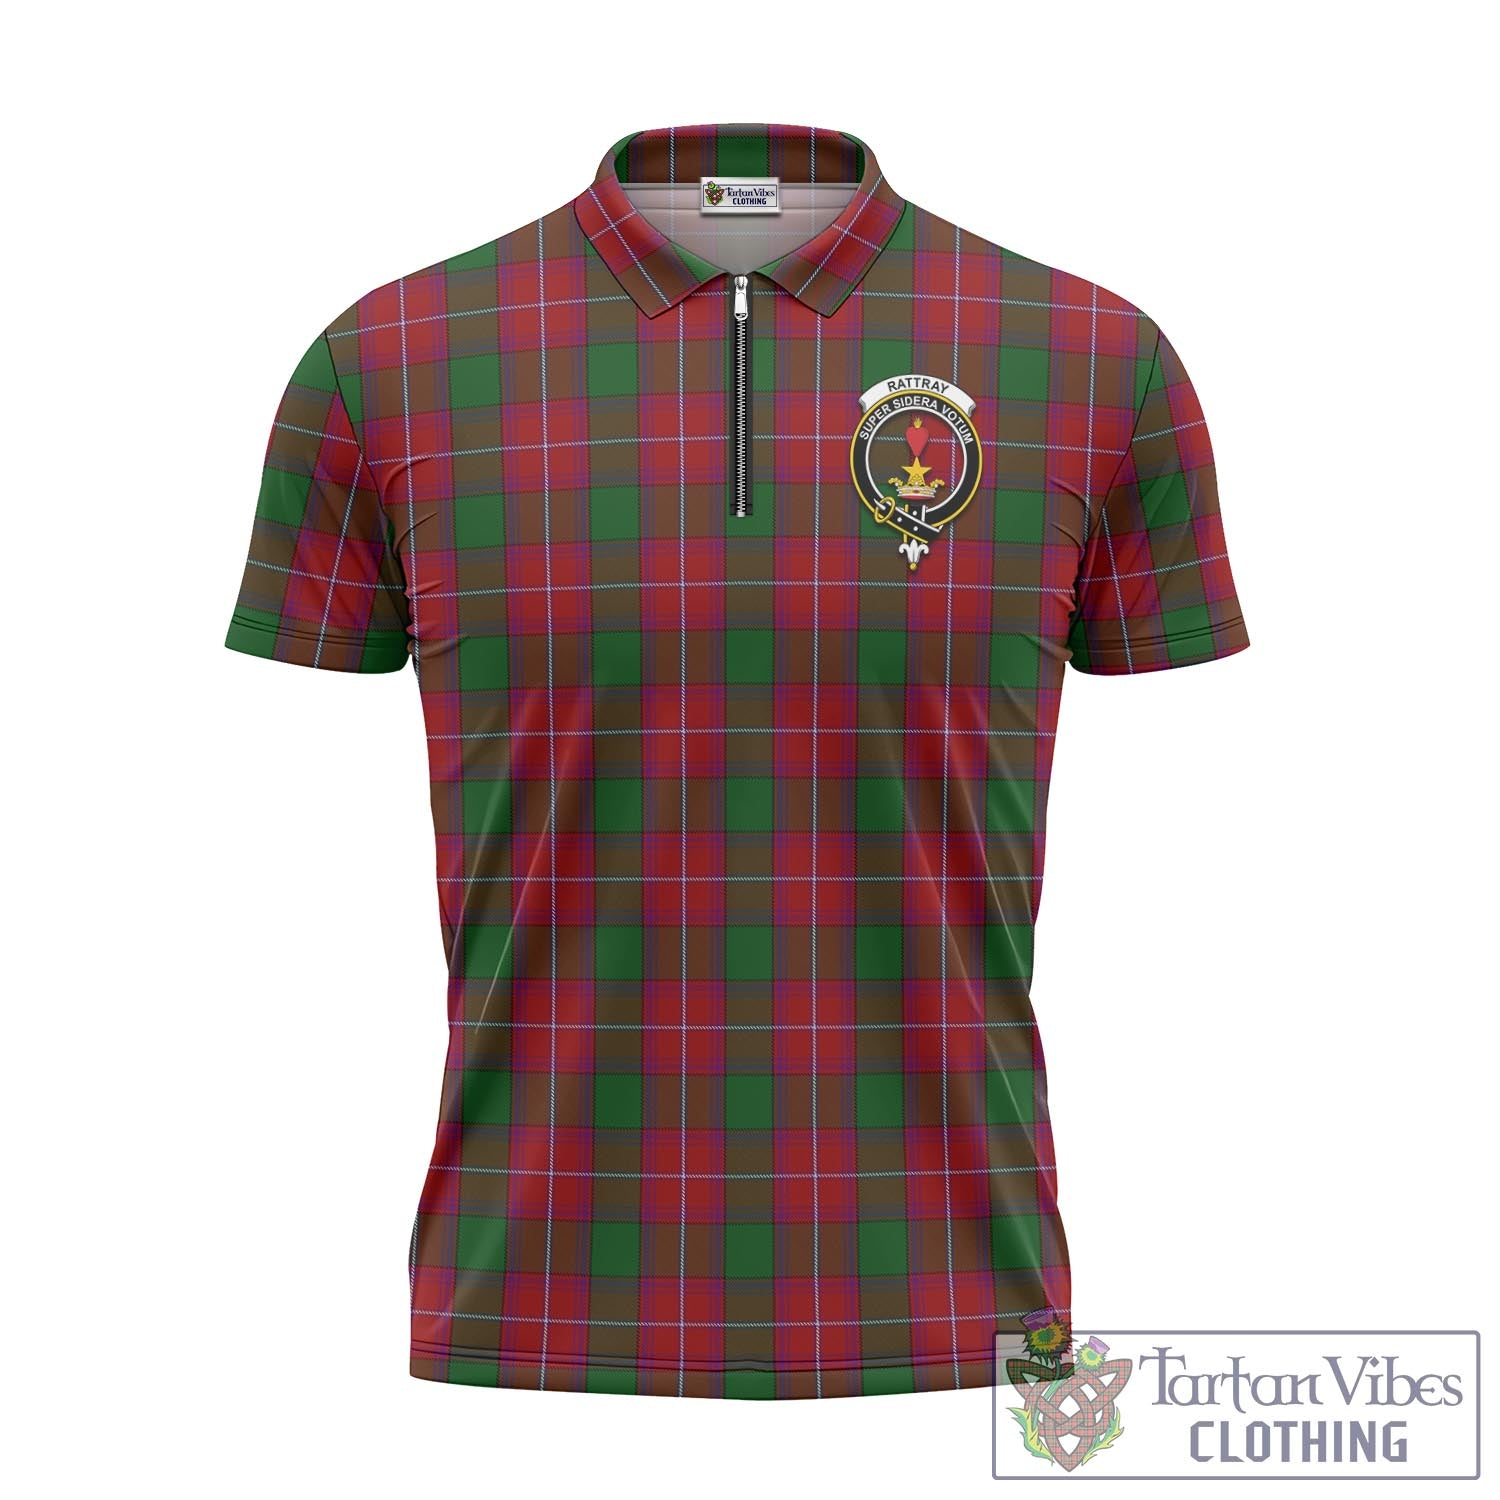 Tartan Vibes Clothing Rattray Tartan Zipper Polo Shirt with Family Crest